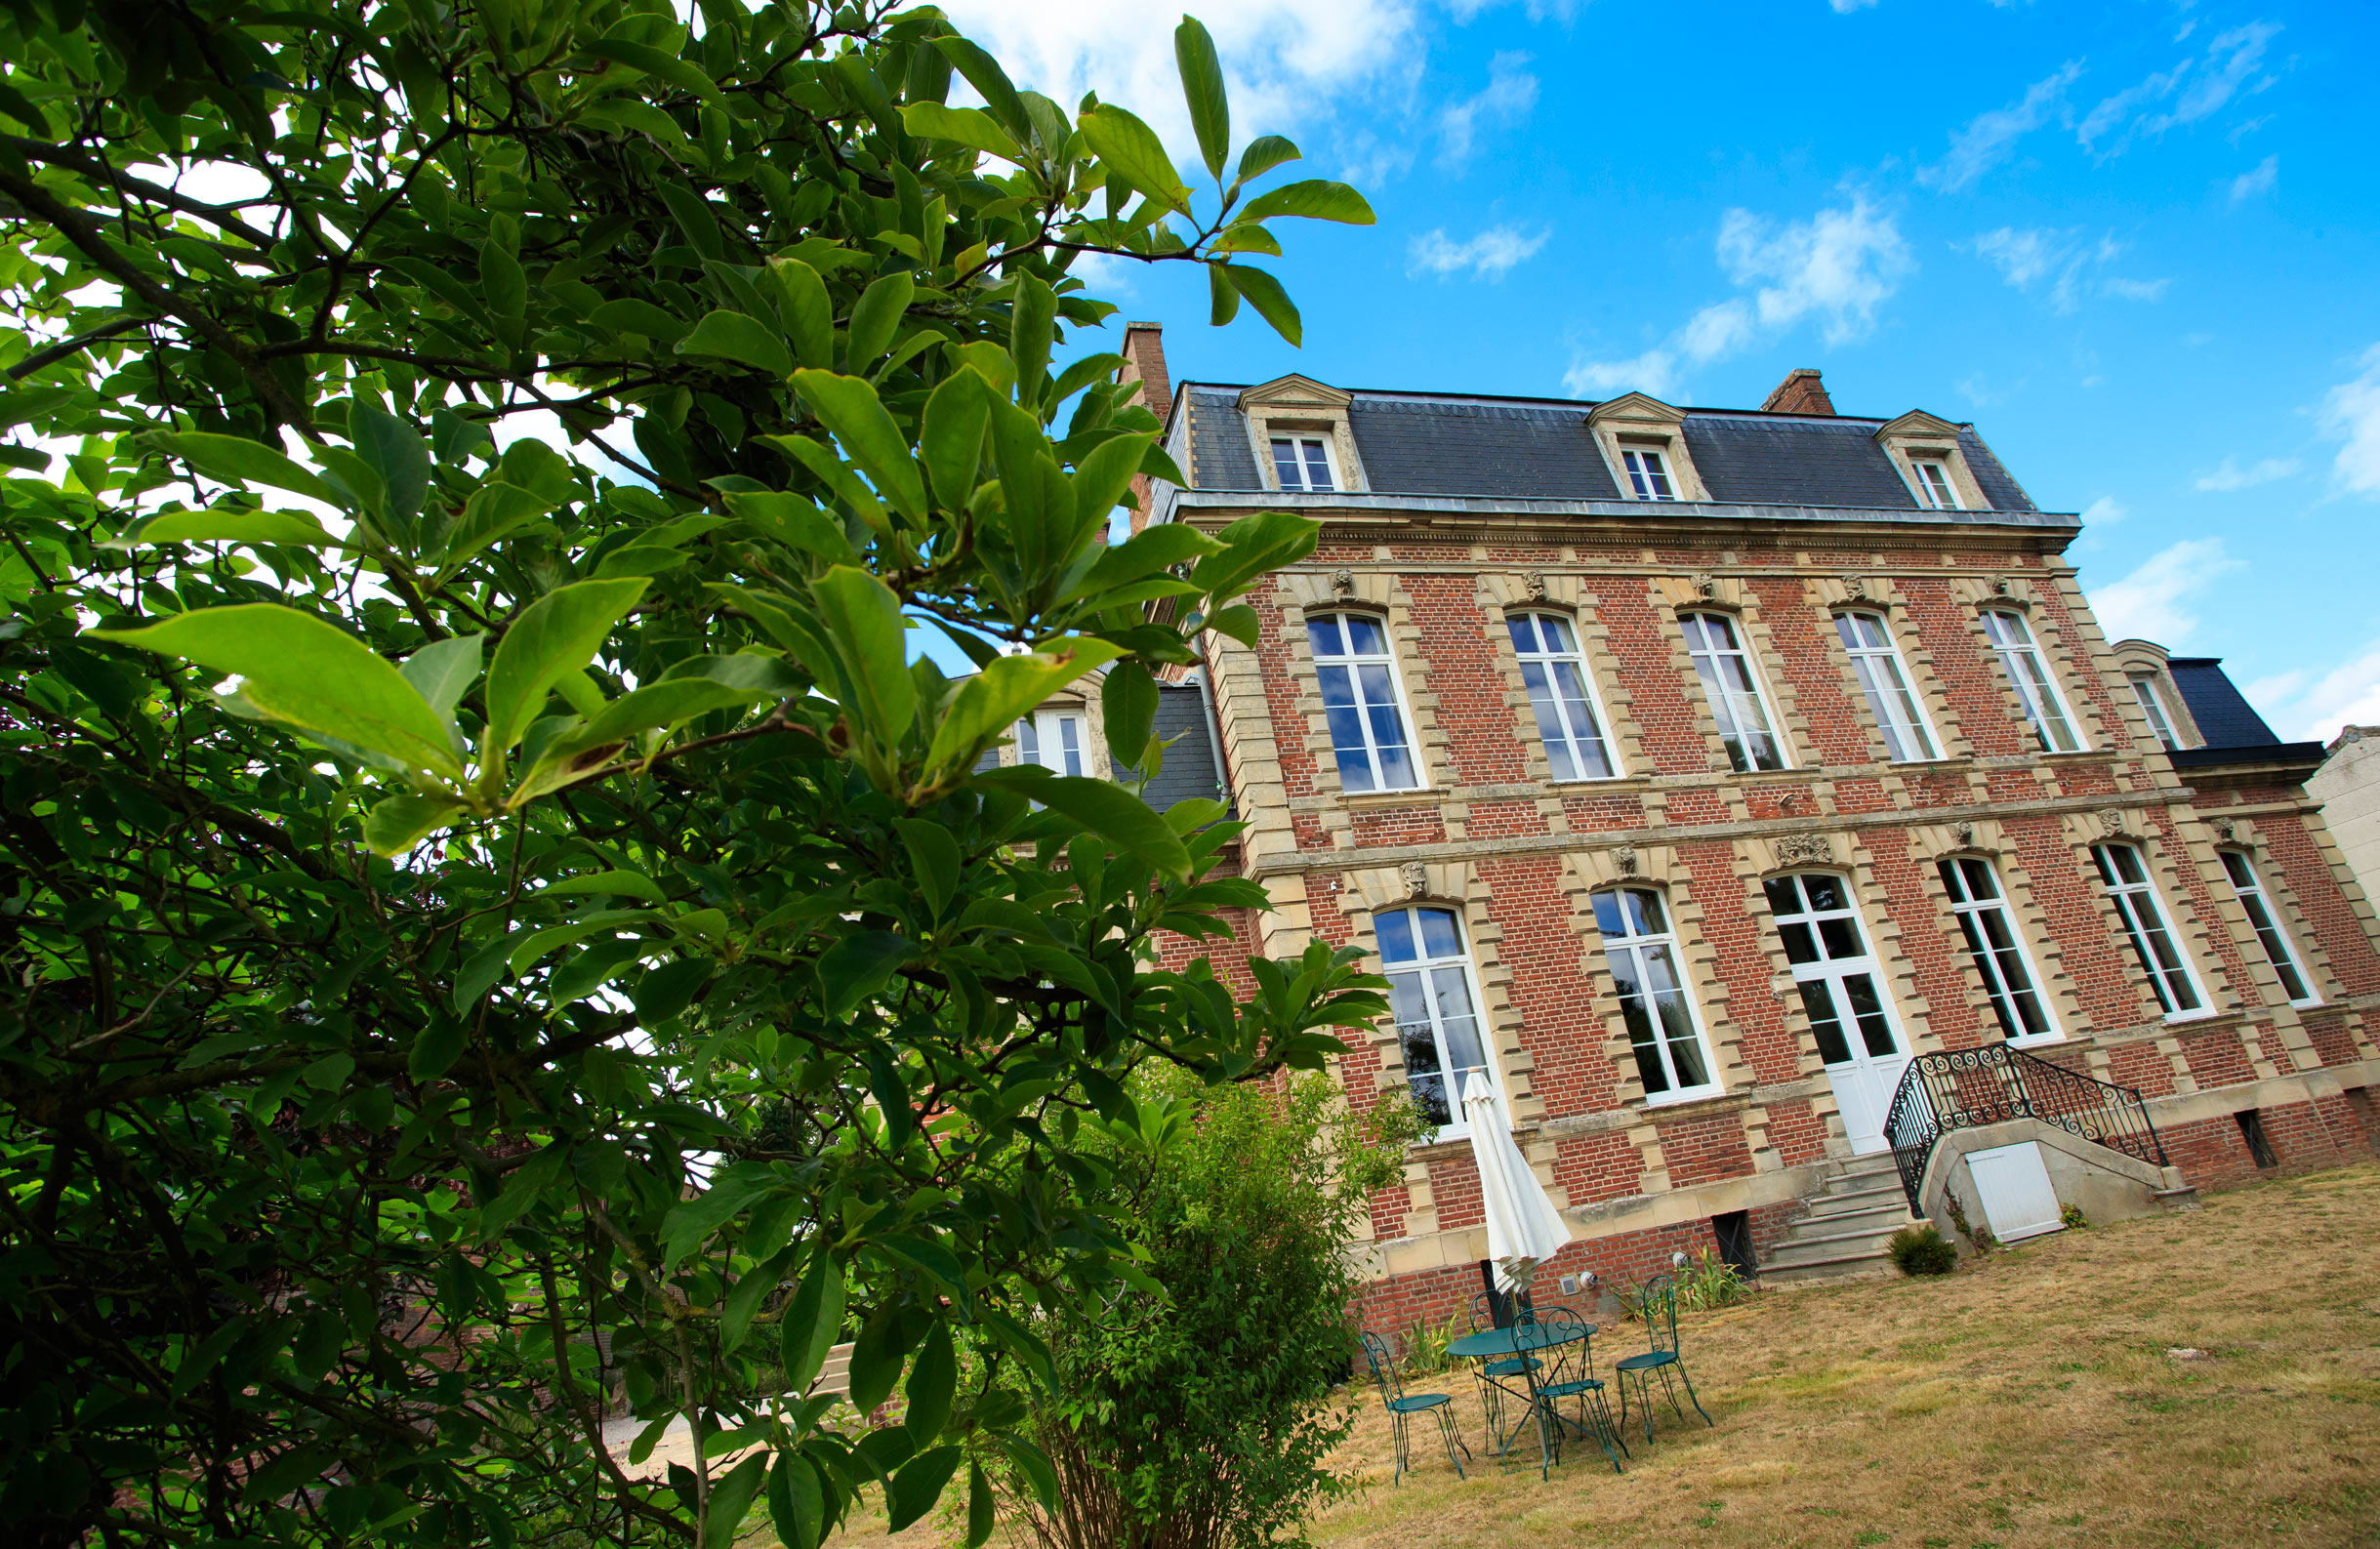 Villa Varentia B&B in Villers Bretonneux, as seen from its beautiful gardens